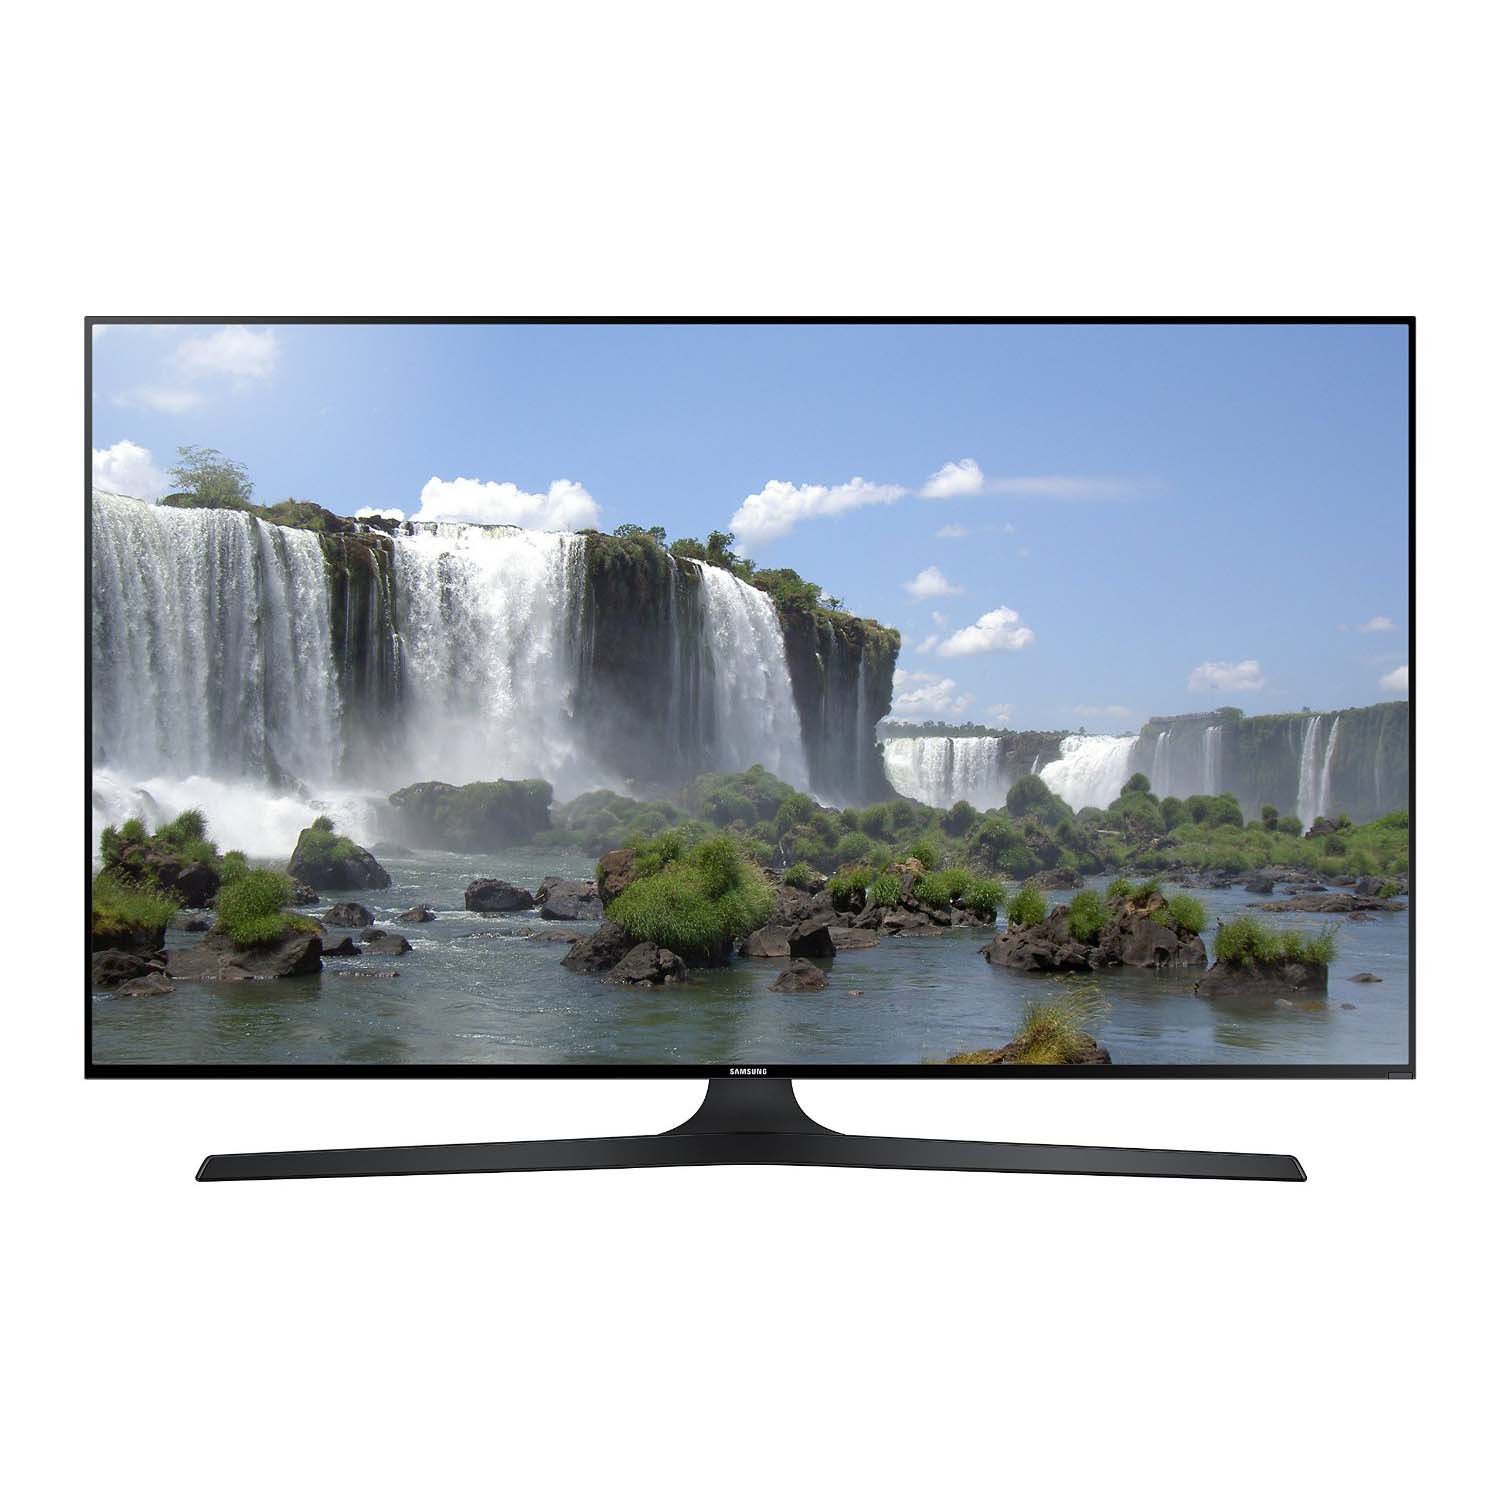 Samsung UN60J6300 60-Inch 1080p Smart LED TV (2015 Model) *관부가세 별도*